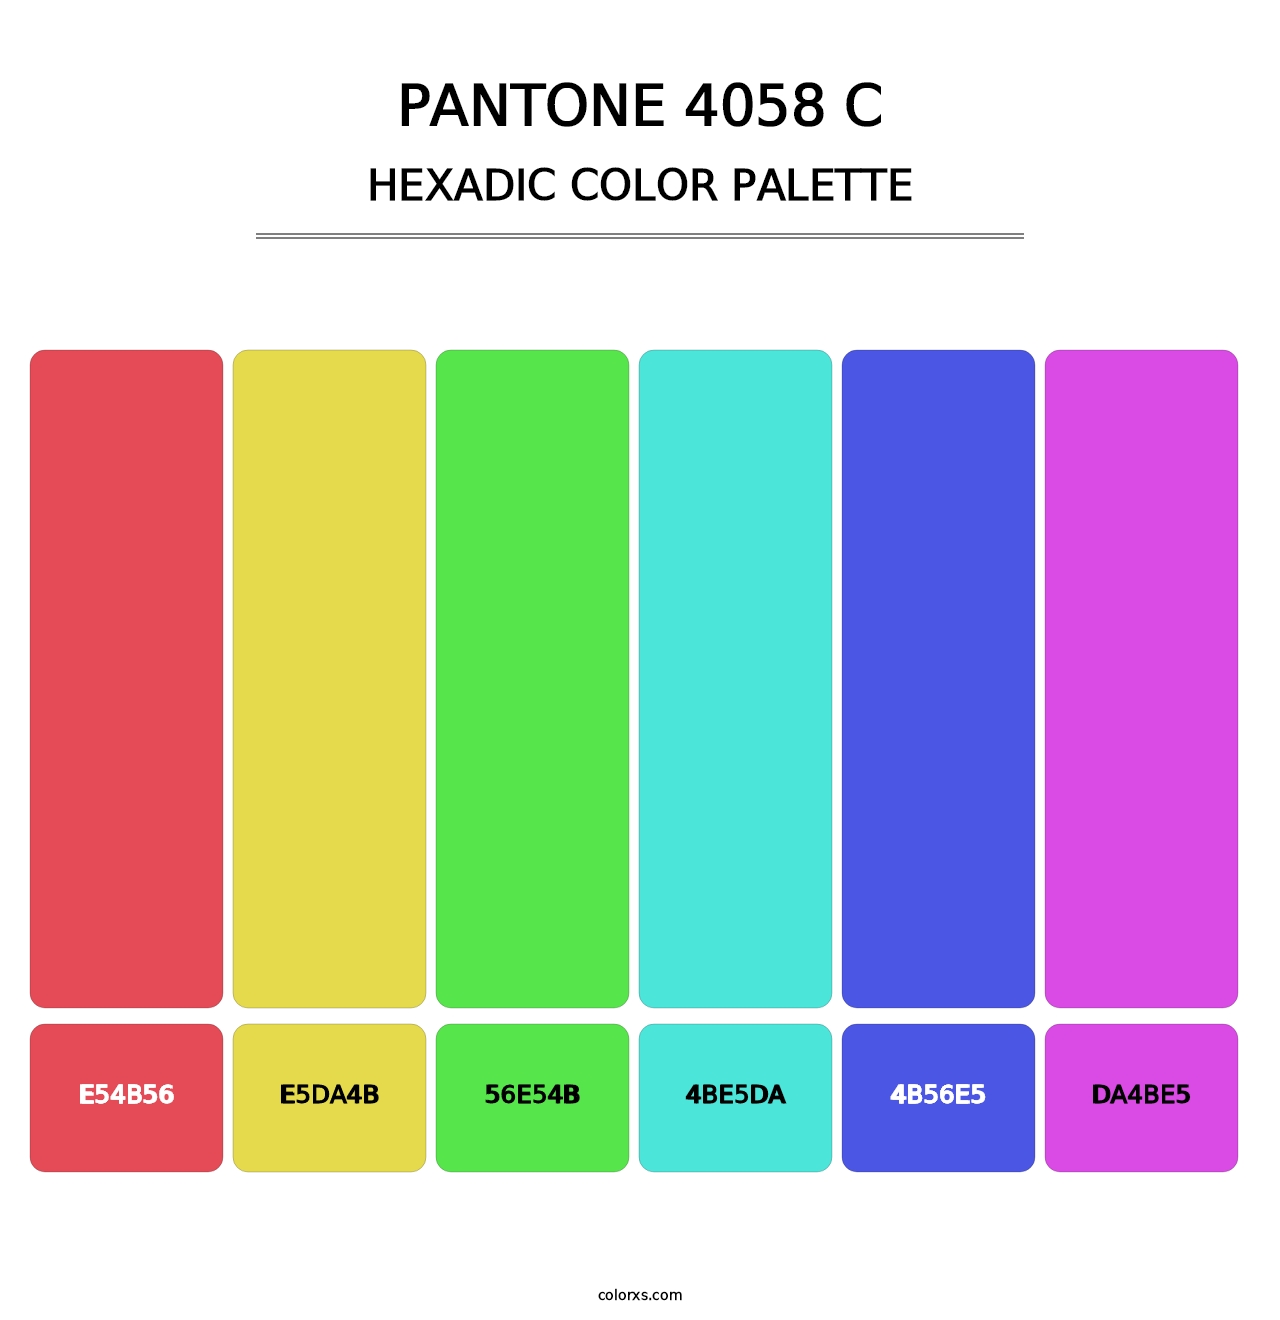 PANTONE 4058 C - Hexadic Color Palette